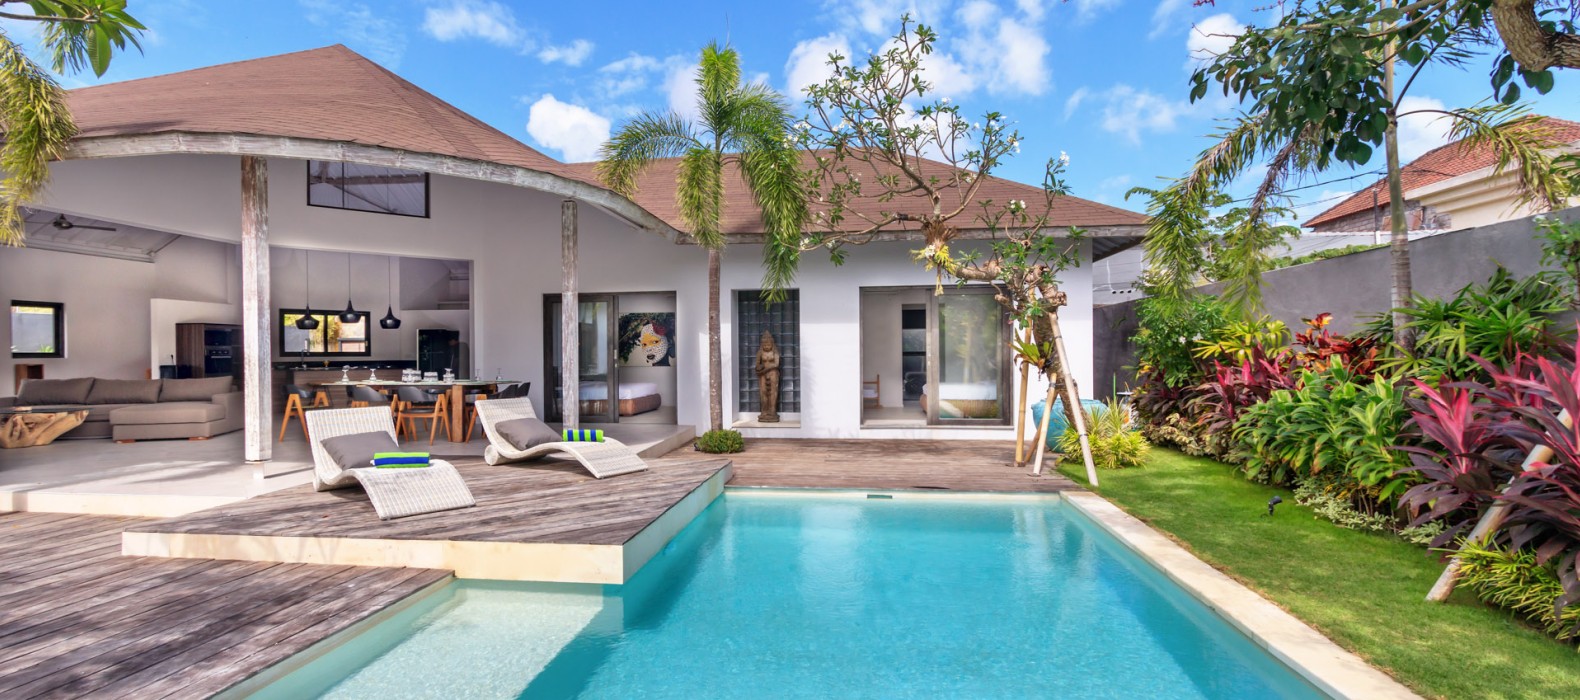 Exterior pool area of Villa Ohana in Bali